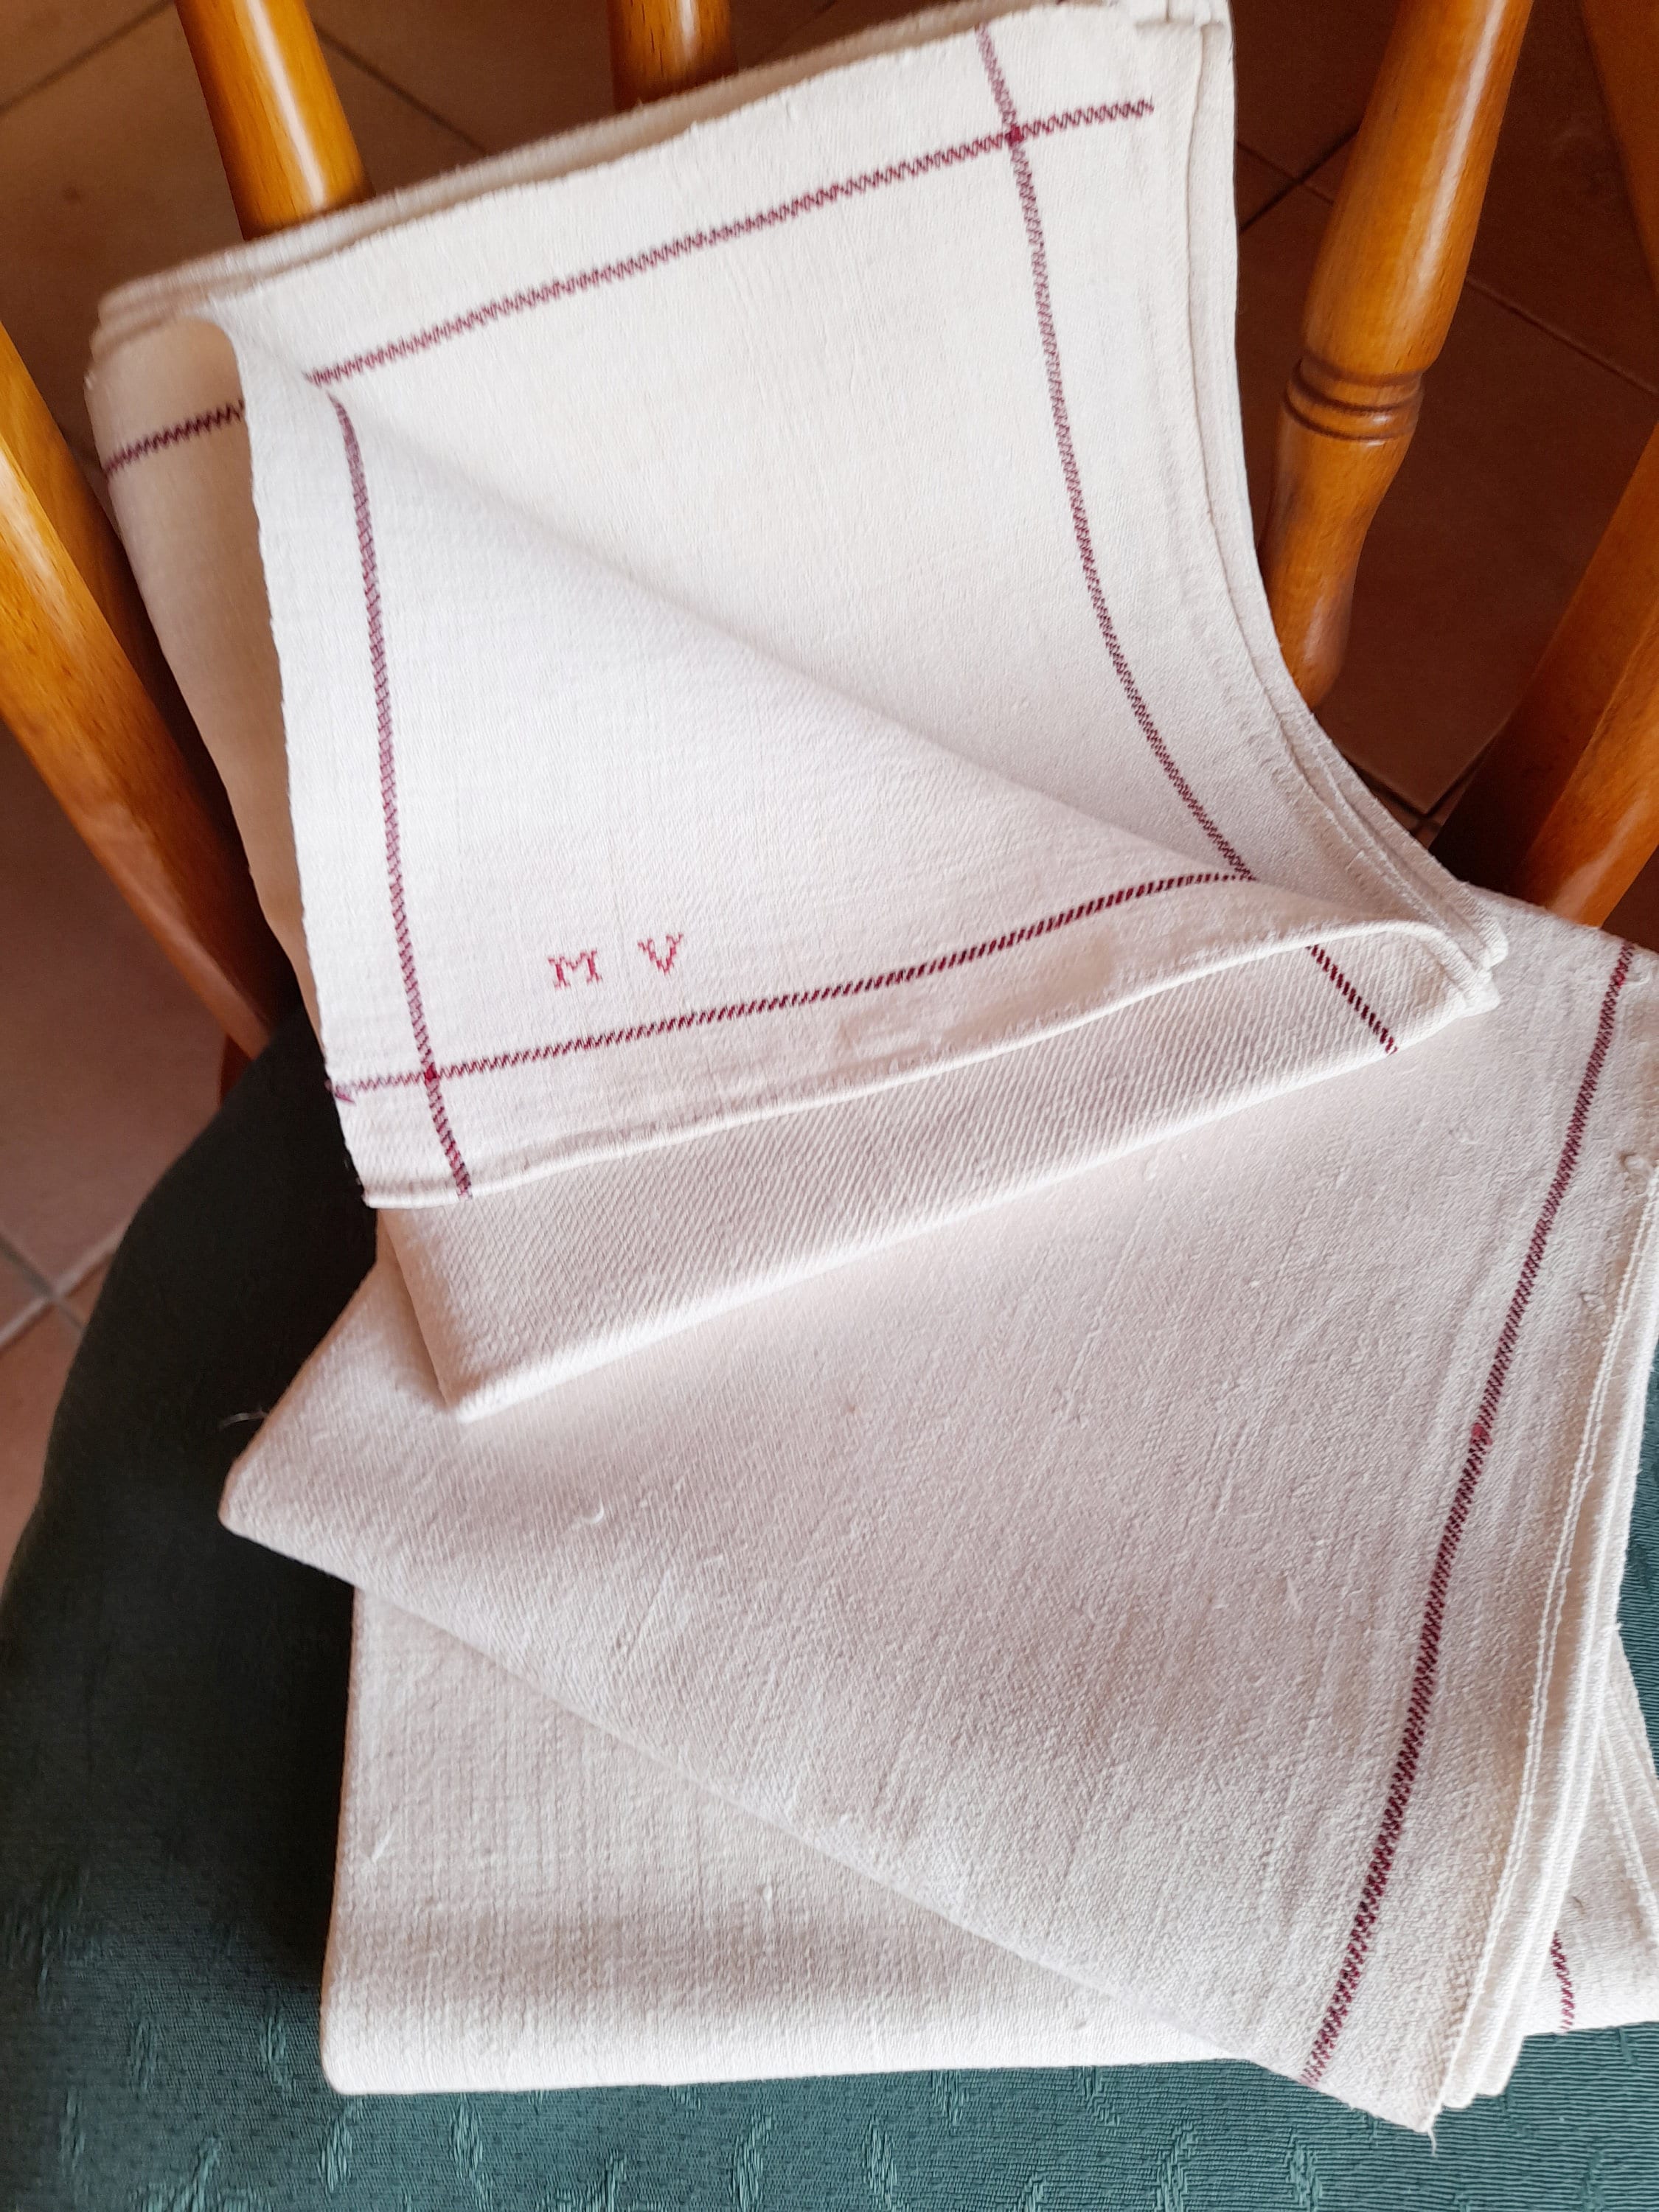 4. KITCHEN – Dish Cloths, Dish Towels, Napkins – Hemp Copenhagen Co.